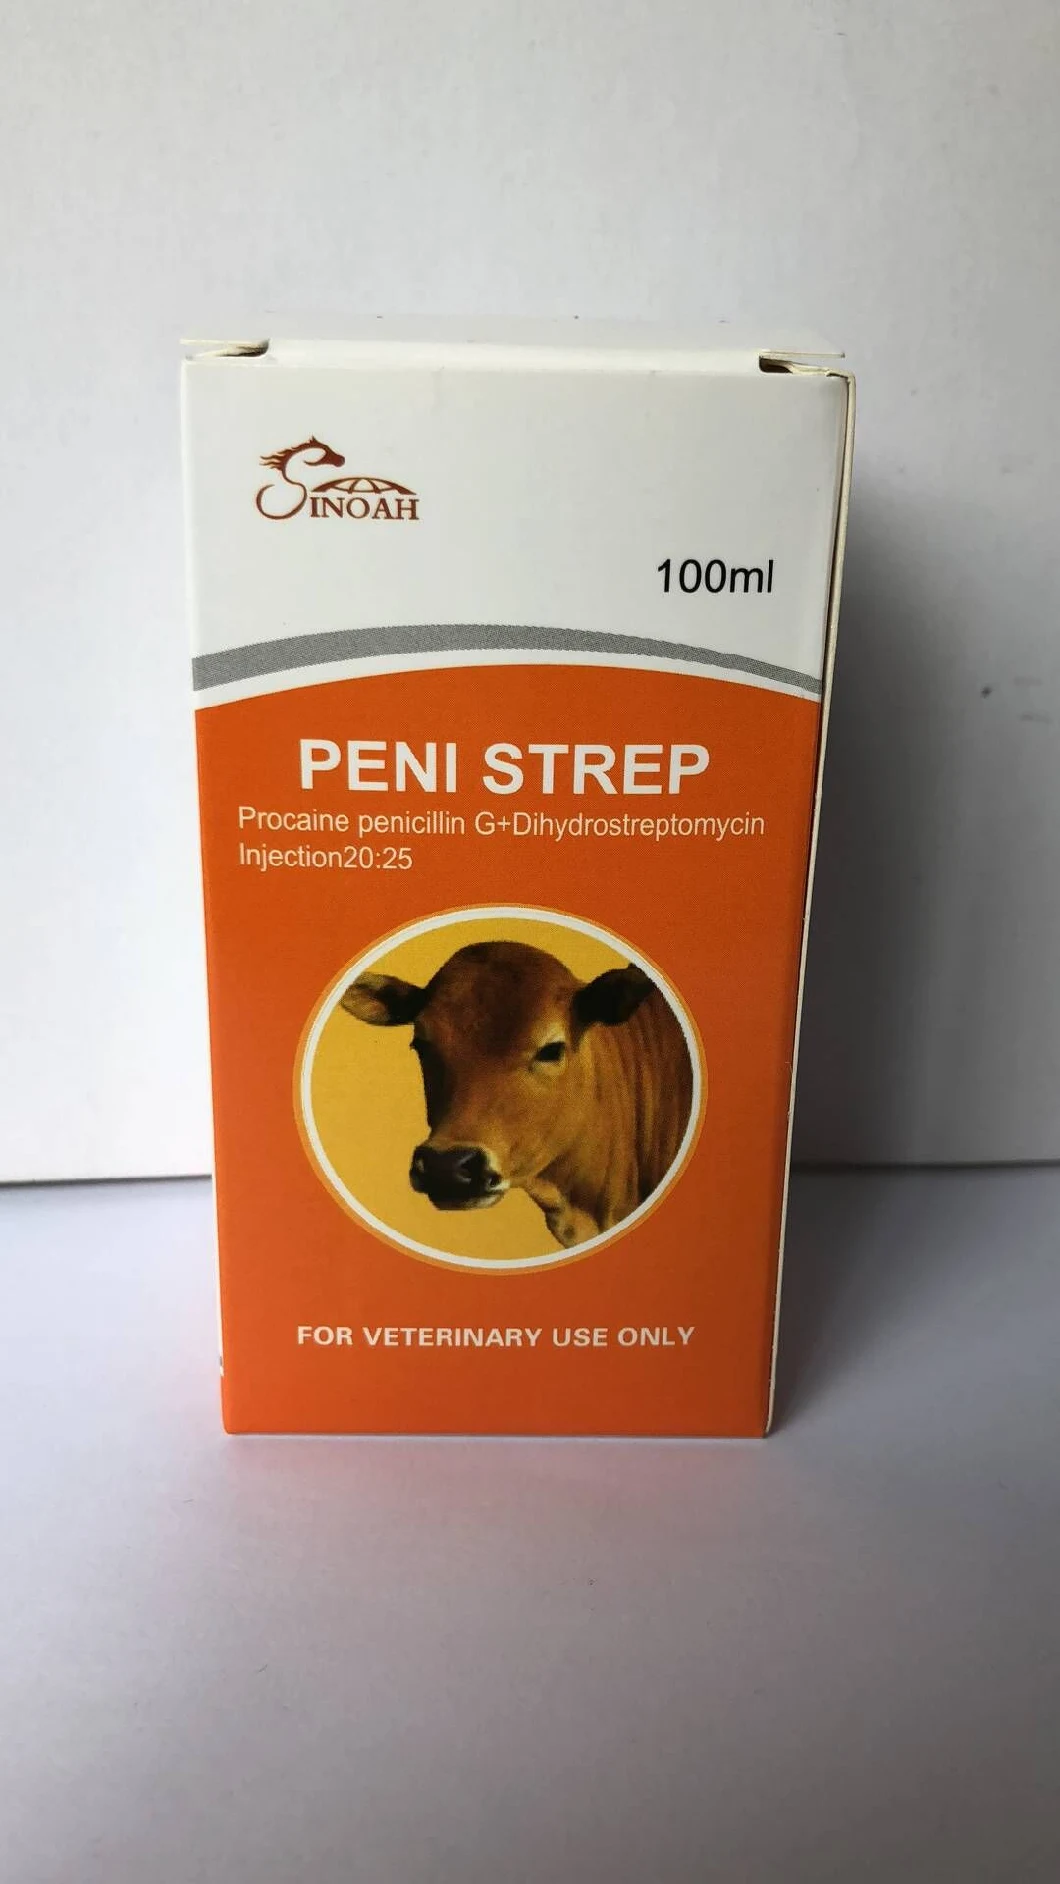 Penicillin Streptomycin Injection for Veterinary Use Only 20: 25